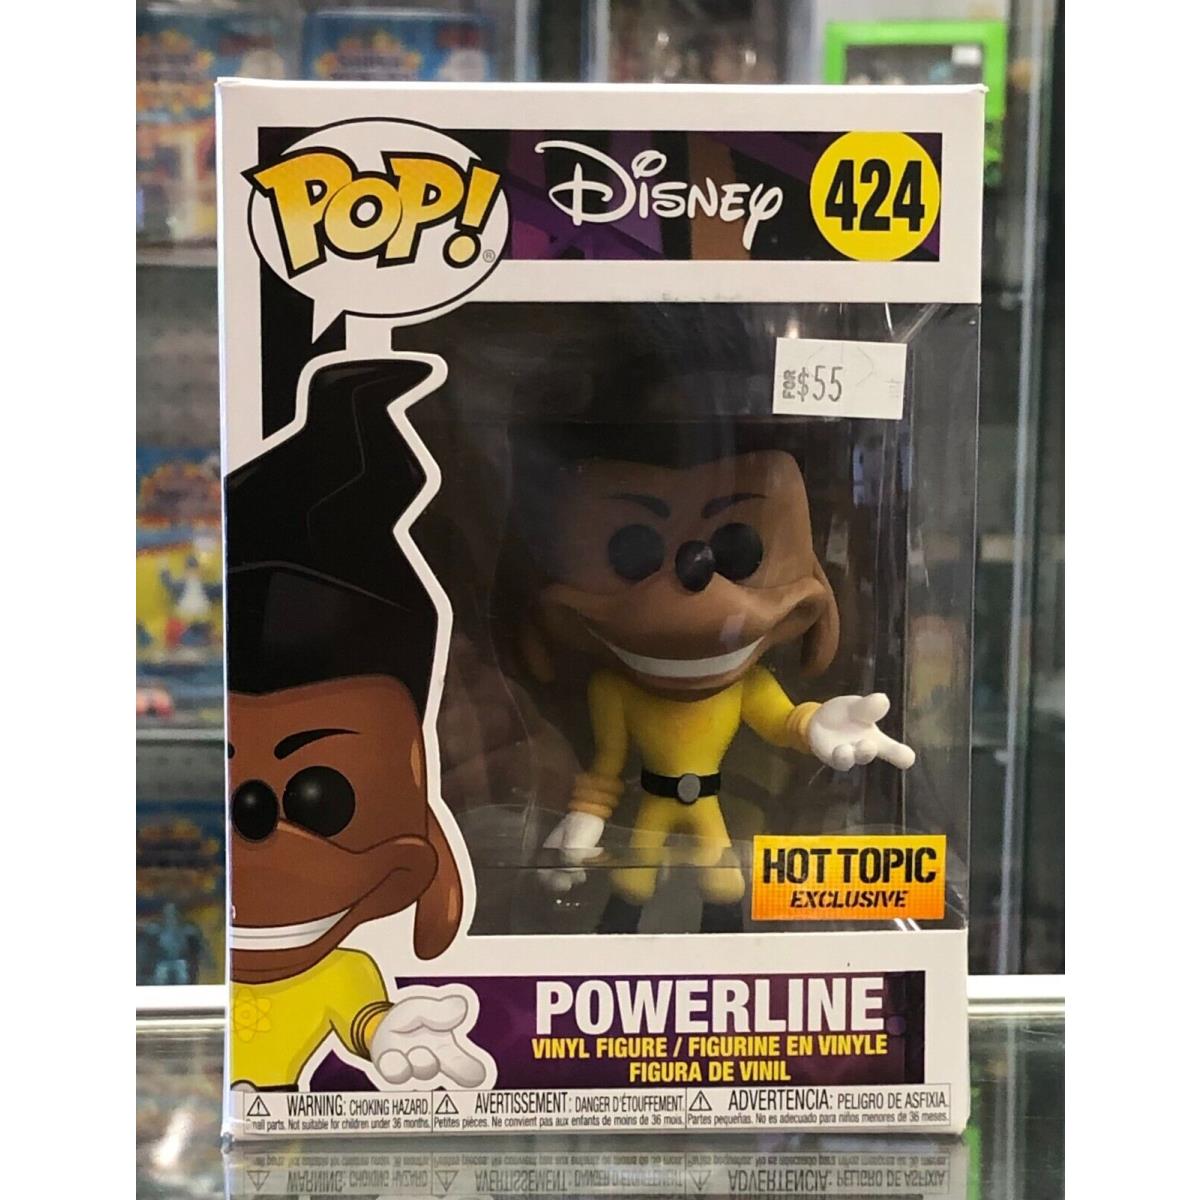 Funko Pop Disney 424 Goofy Movie Powerline Vinyl Figure - Hot Topic Exclusive